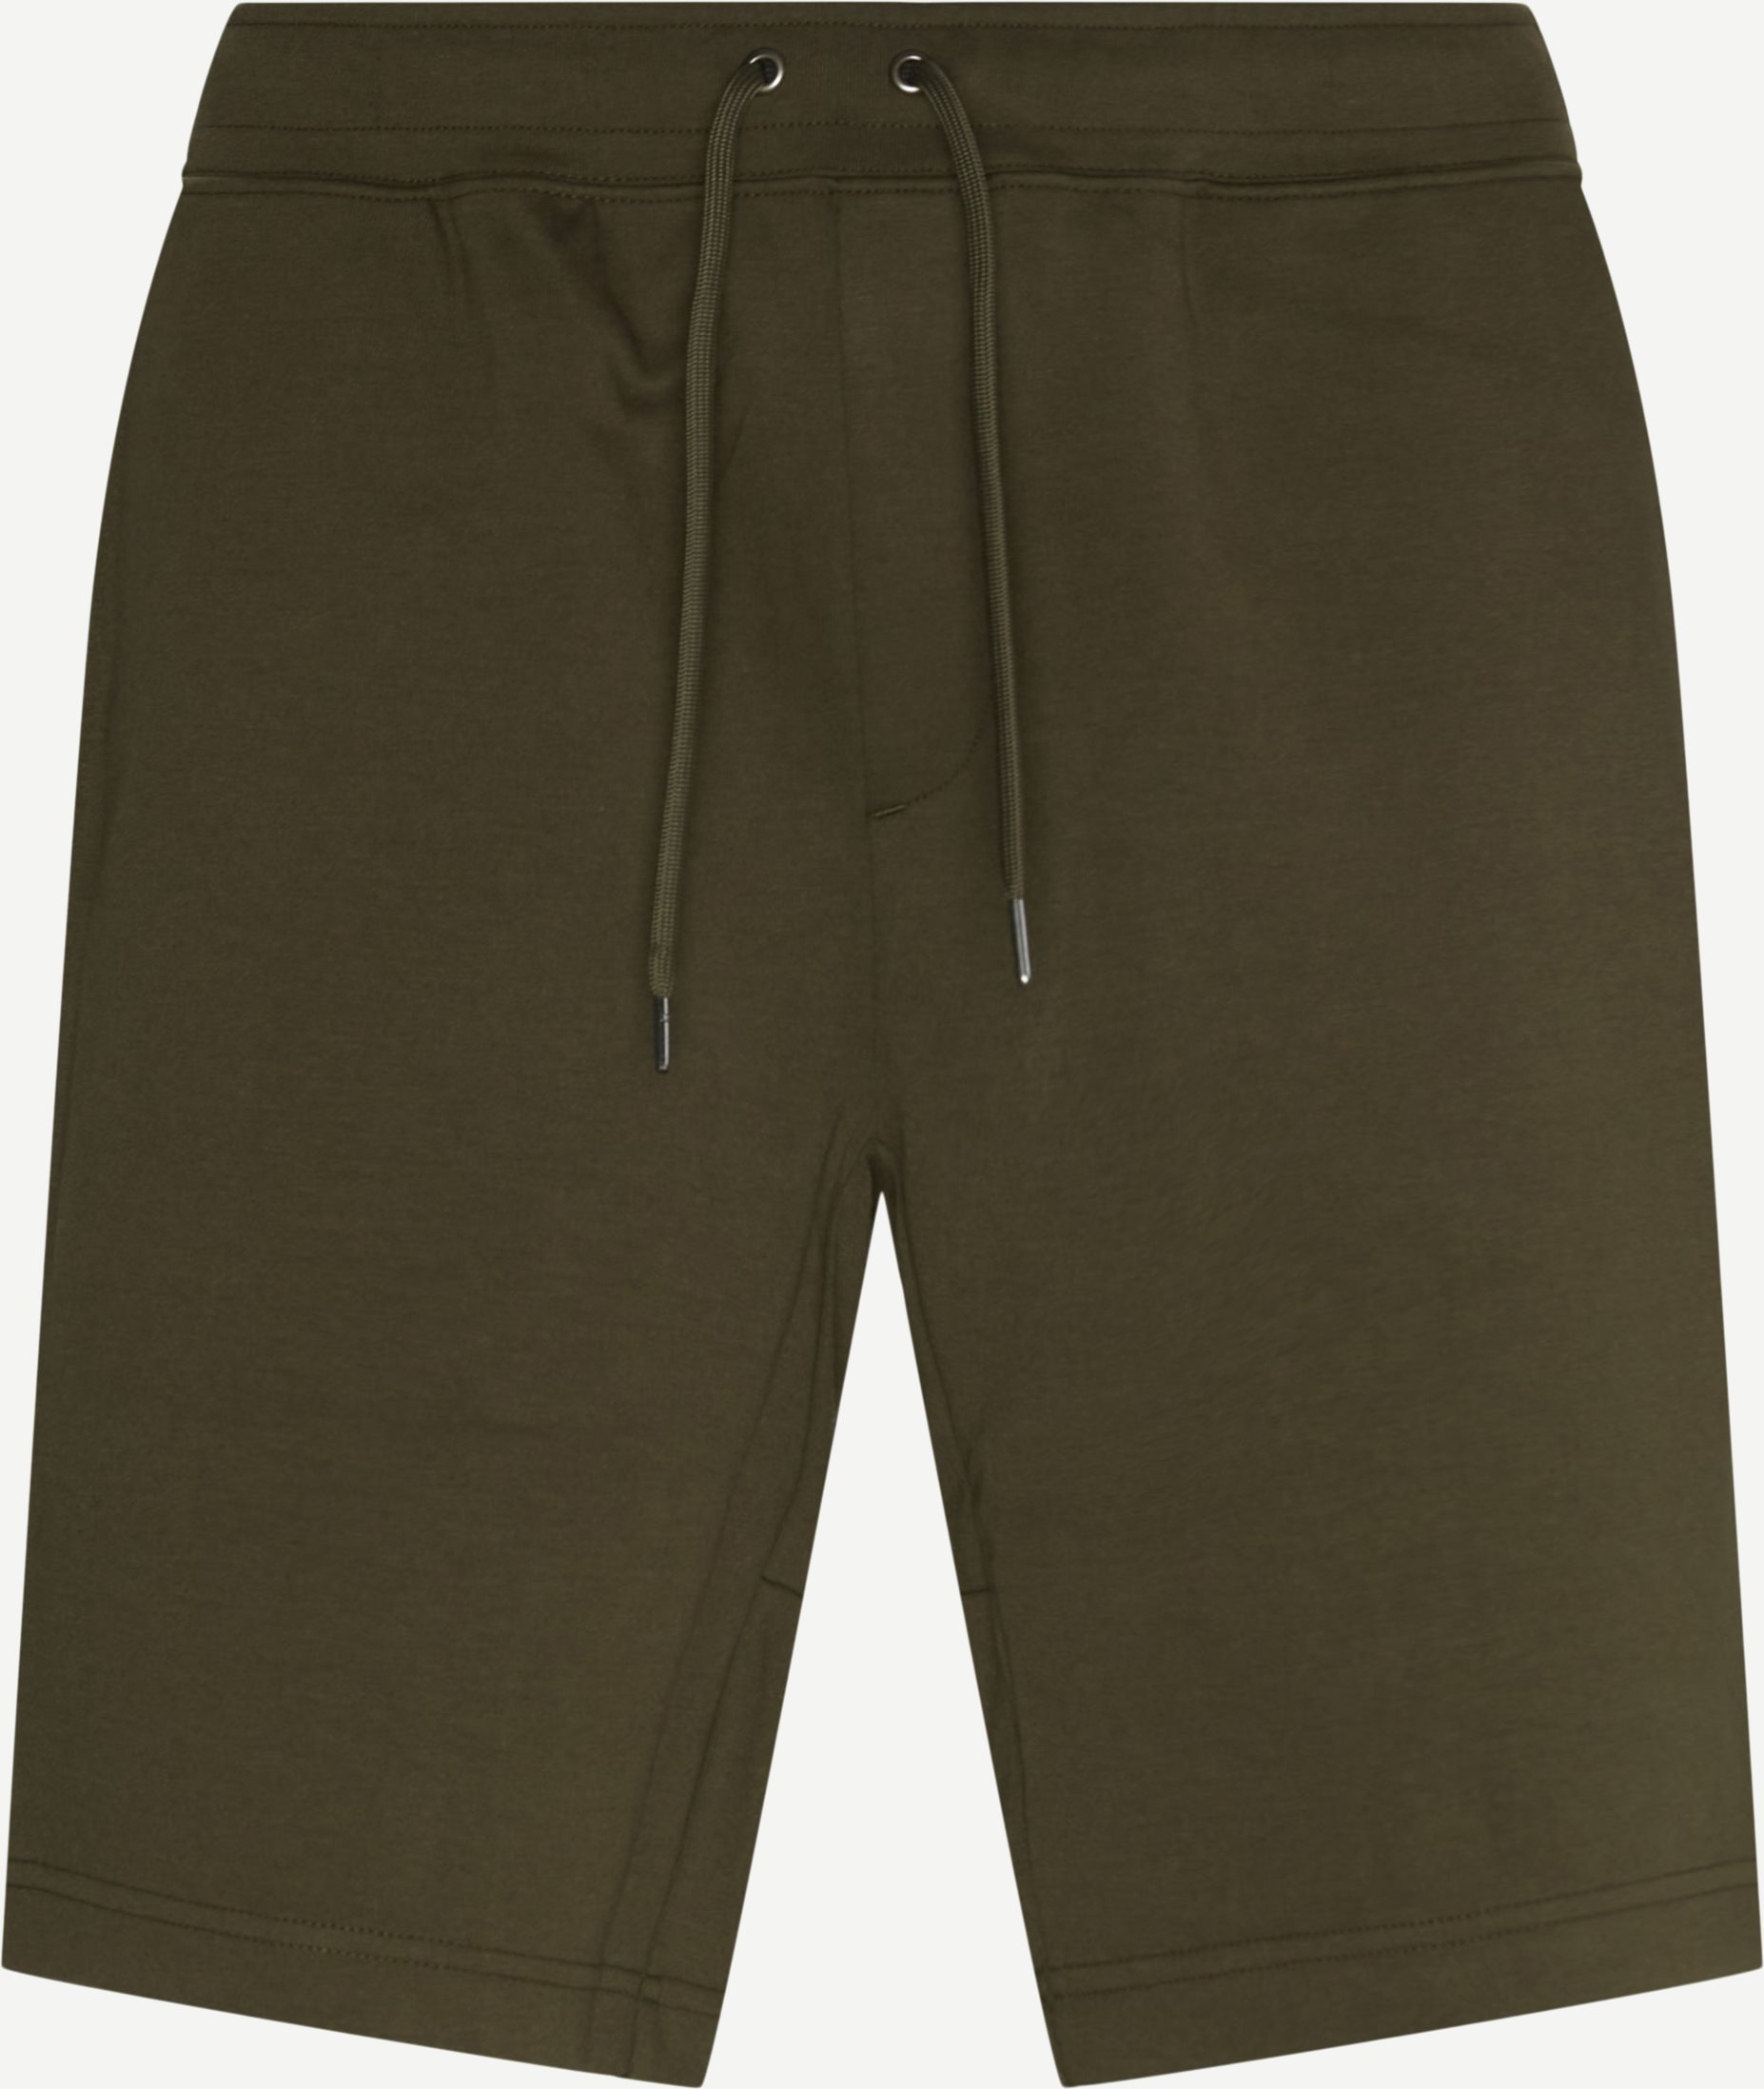 Cotton Shorts - Shorts - Regular fit - Army